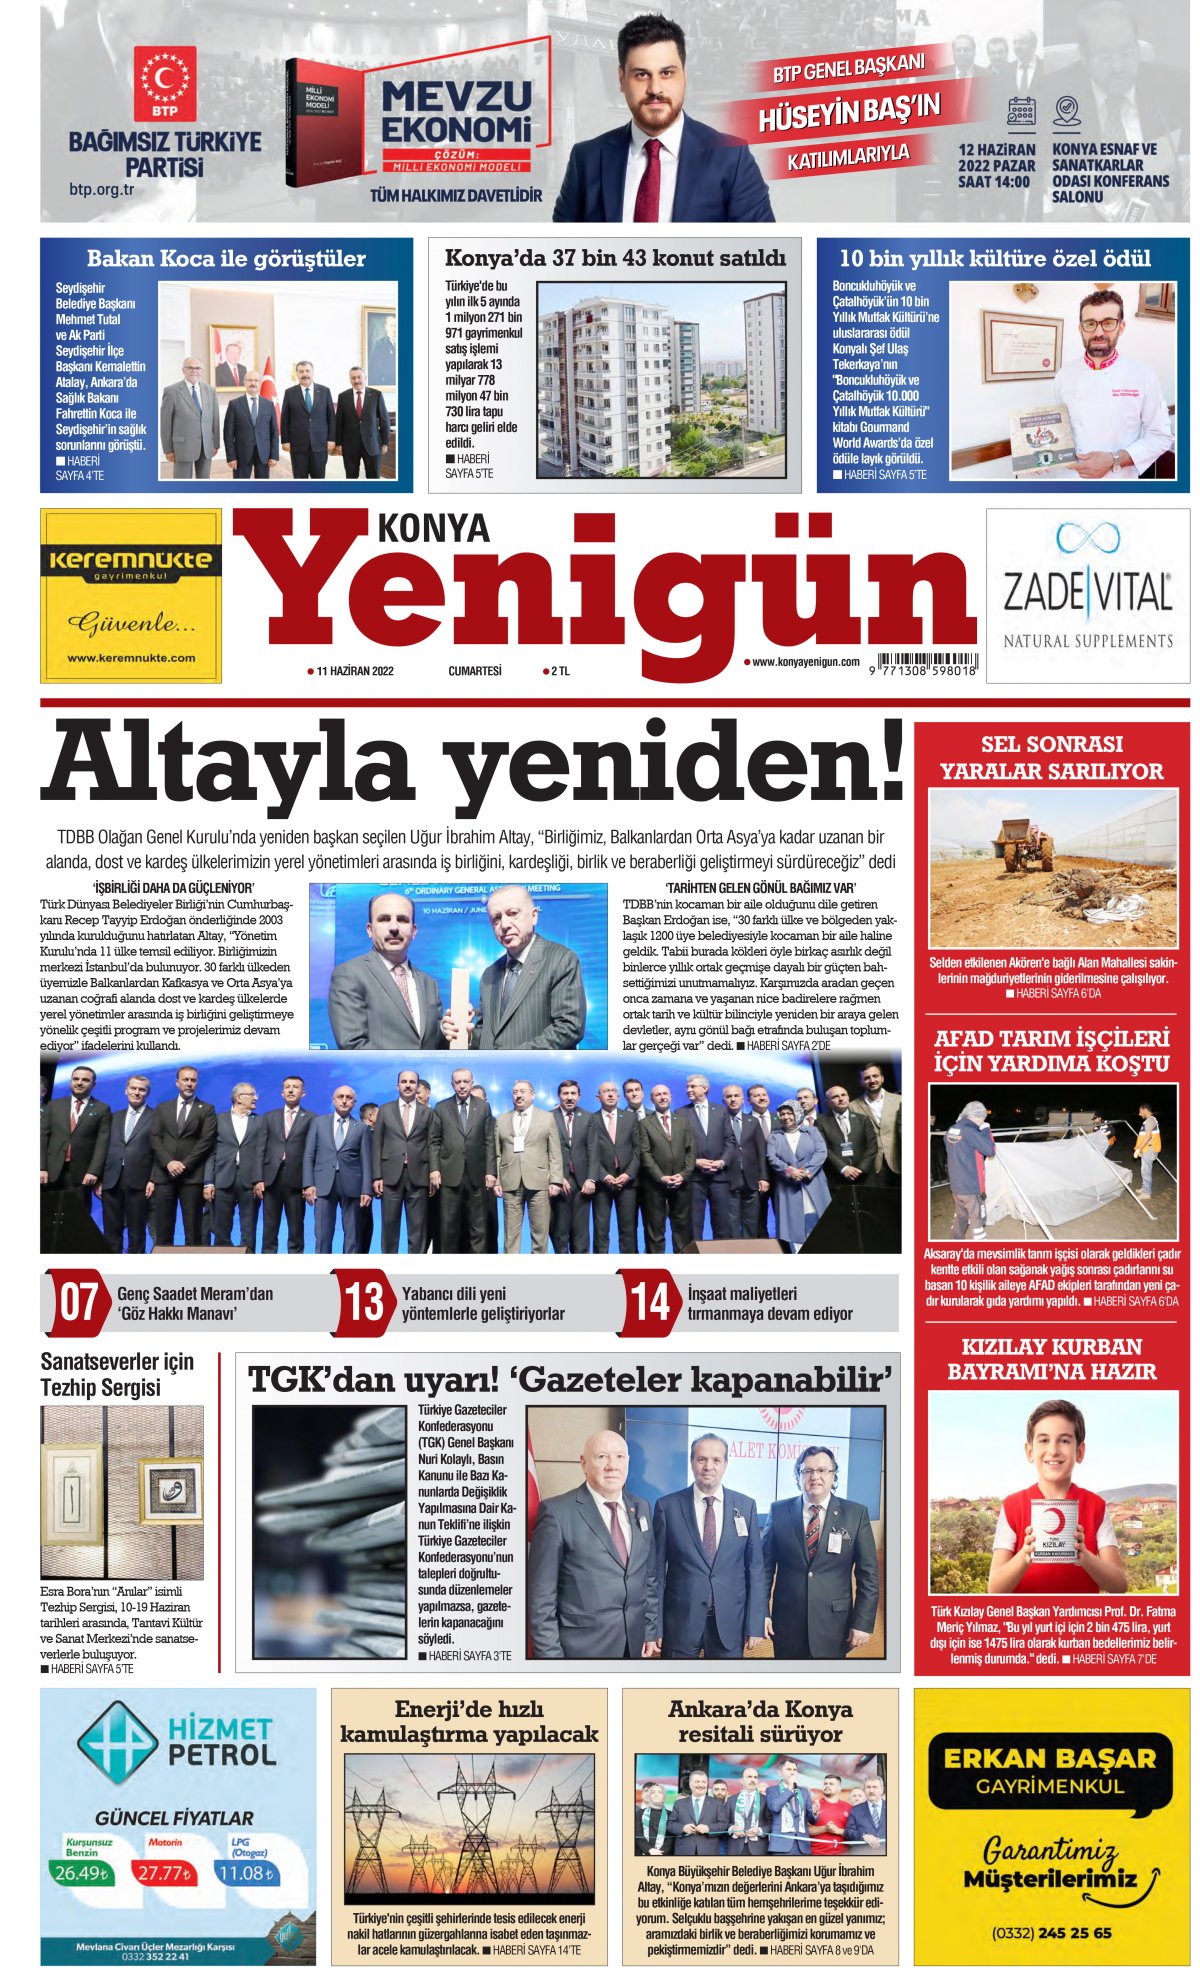 Konya Yenigün Gazetesi - 11.06.2022 Manşeti